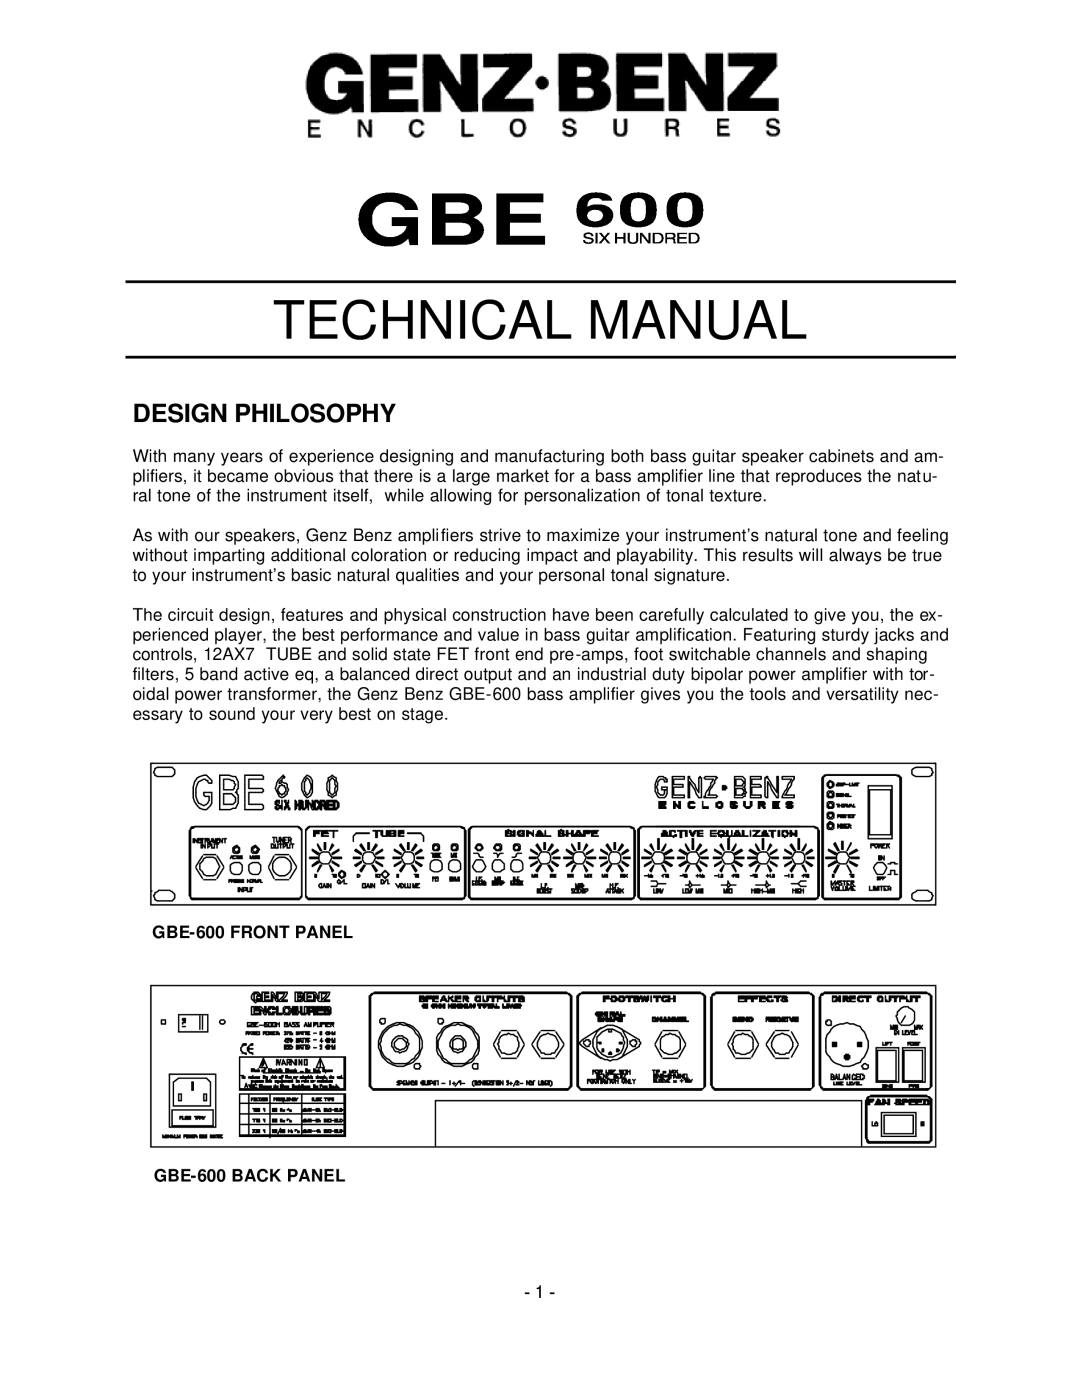 Genz-Benz GBE 600 technical manual Design Philosophy, Technical Manual 